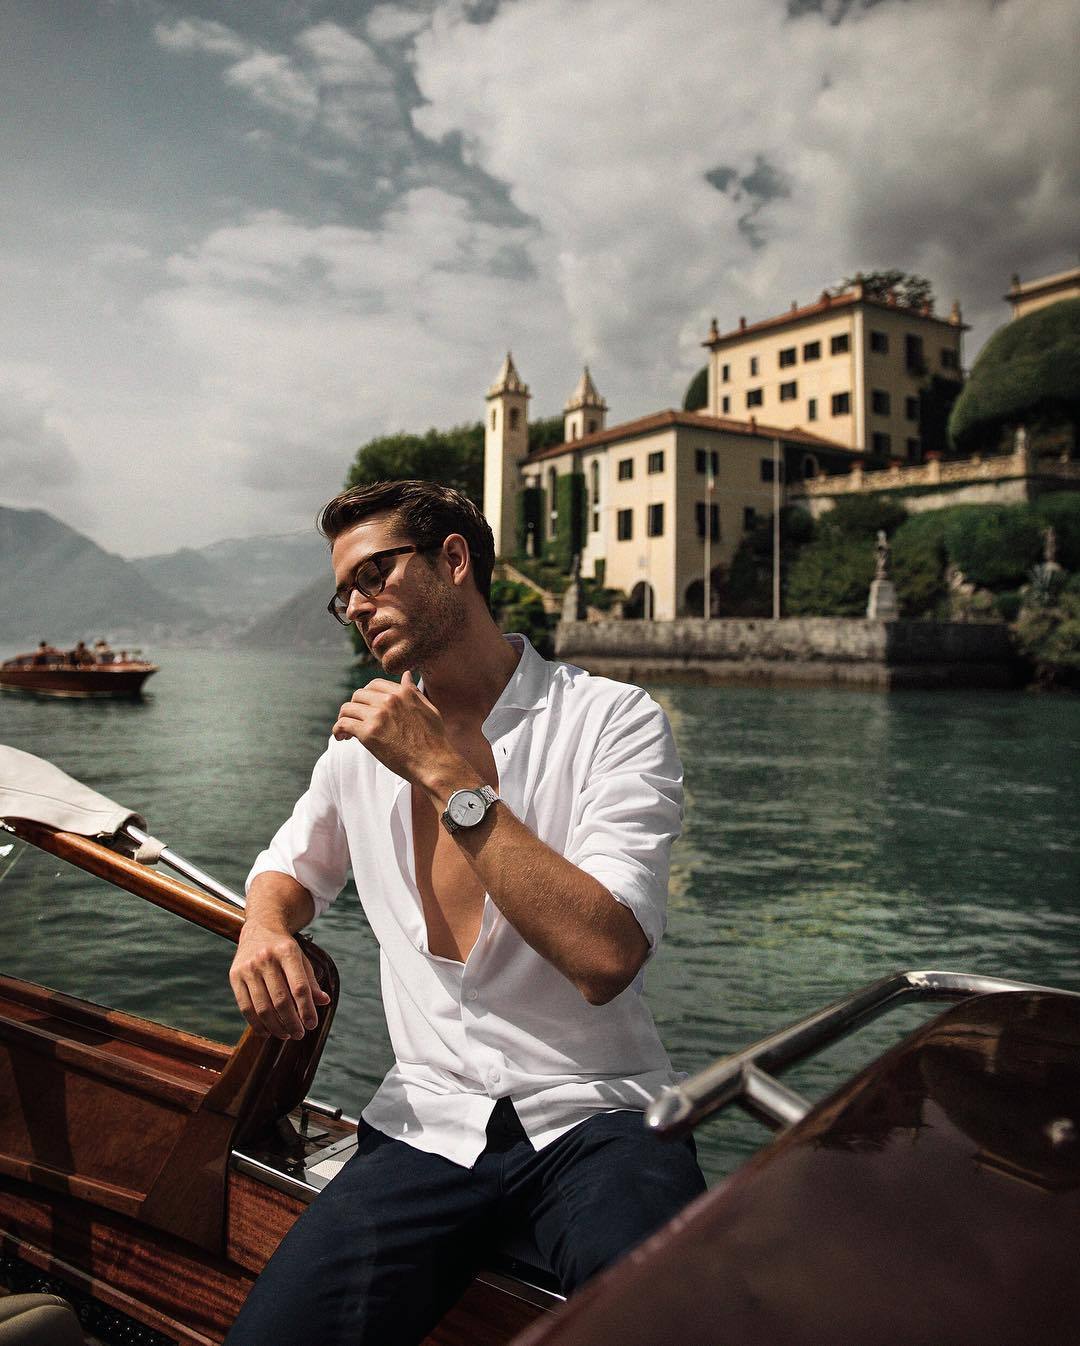 deluxelifestyle:
“Lake Como, Italy (Adam Gallagher)
”